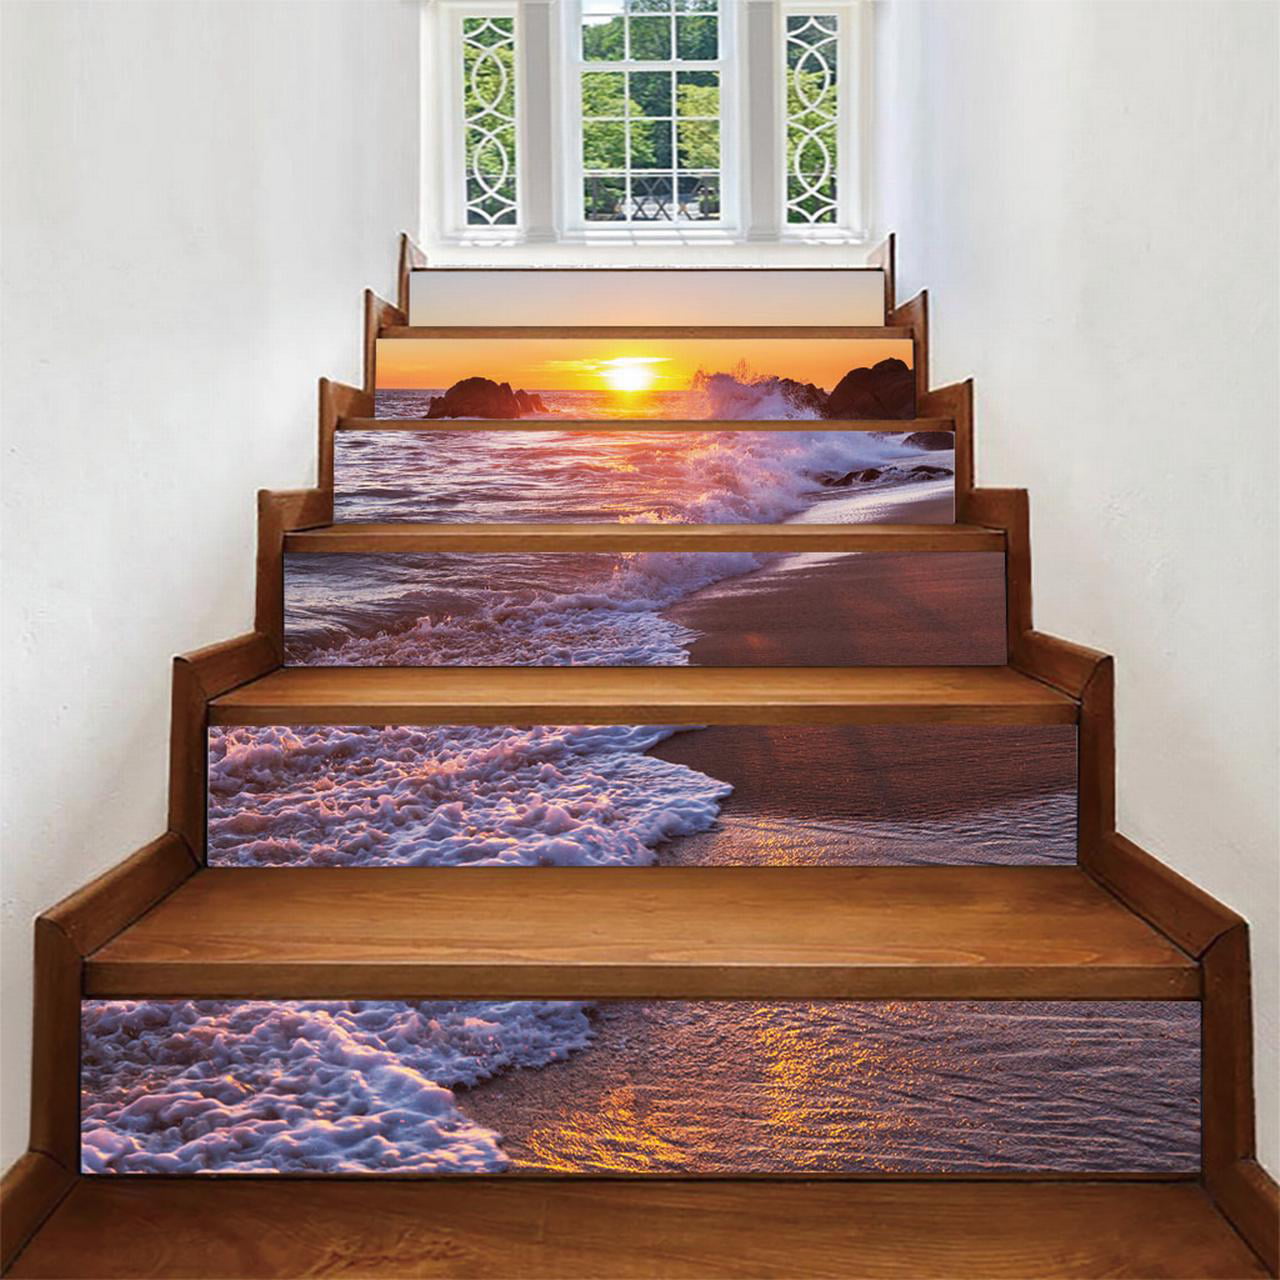 3D Stair Riser Staircase Sticker Bookcase Mural Vinyl Decal Wallpaper C 